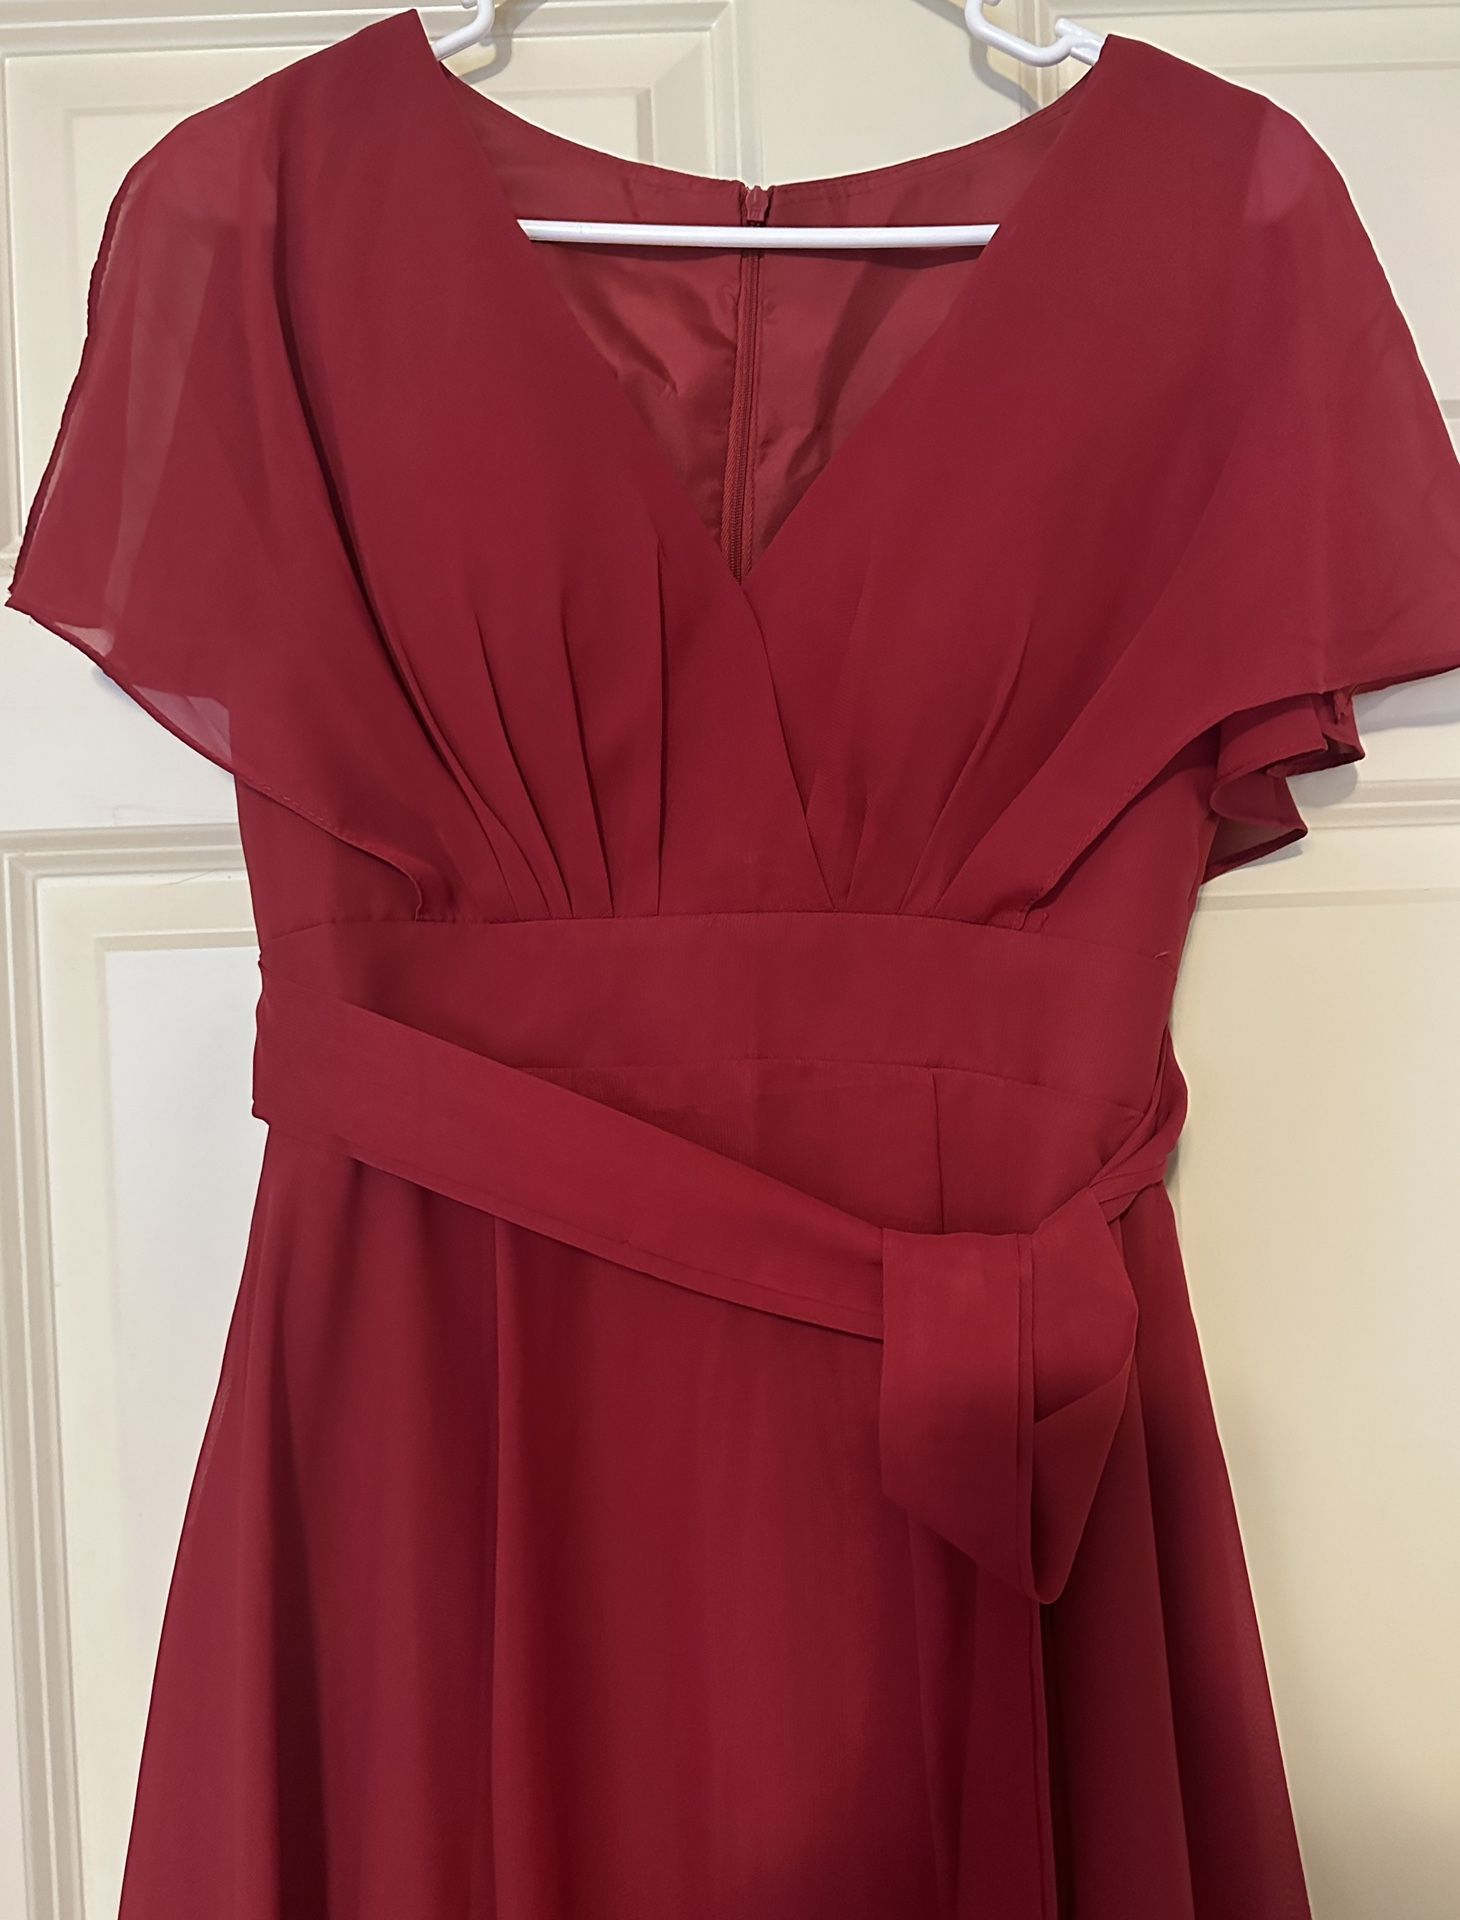 Chiffon/Satin Burgundy Dress - Size 0